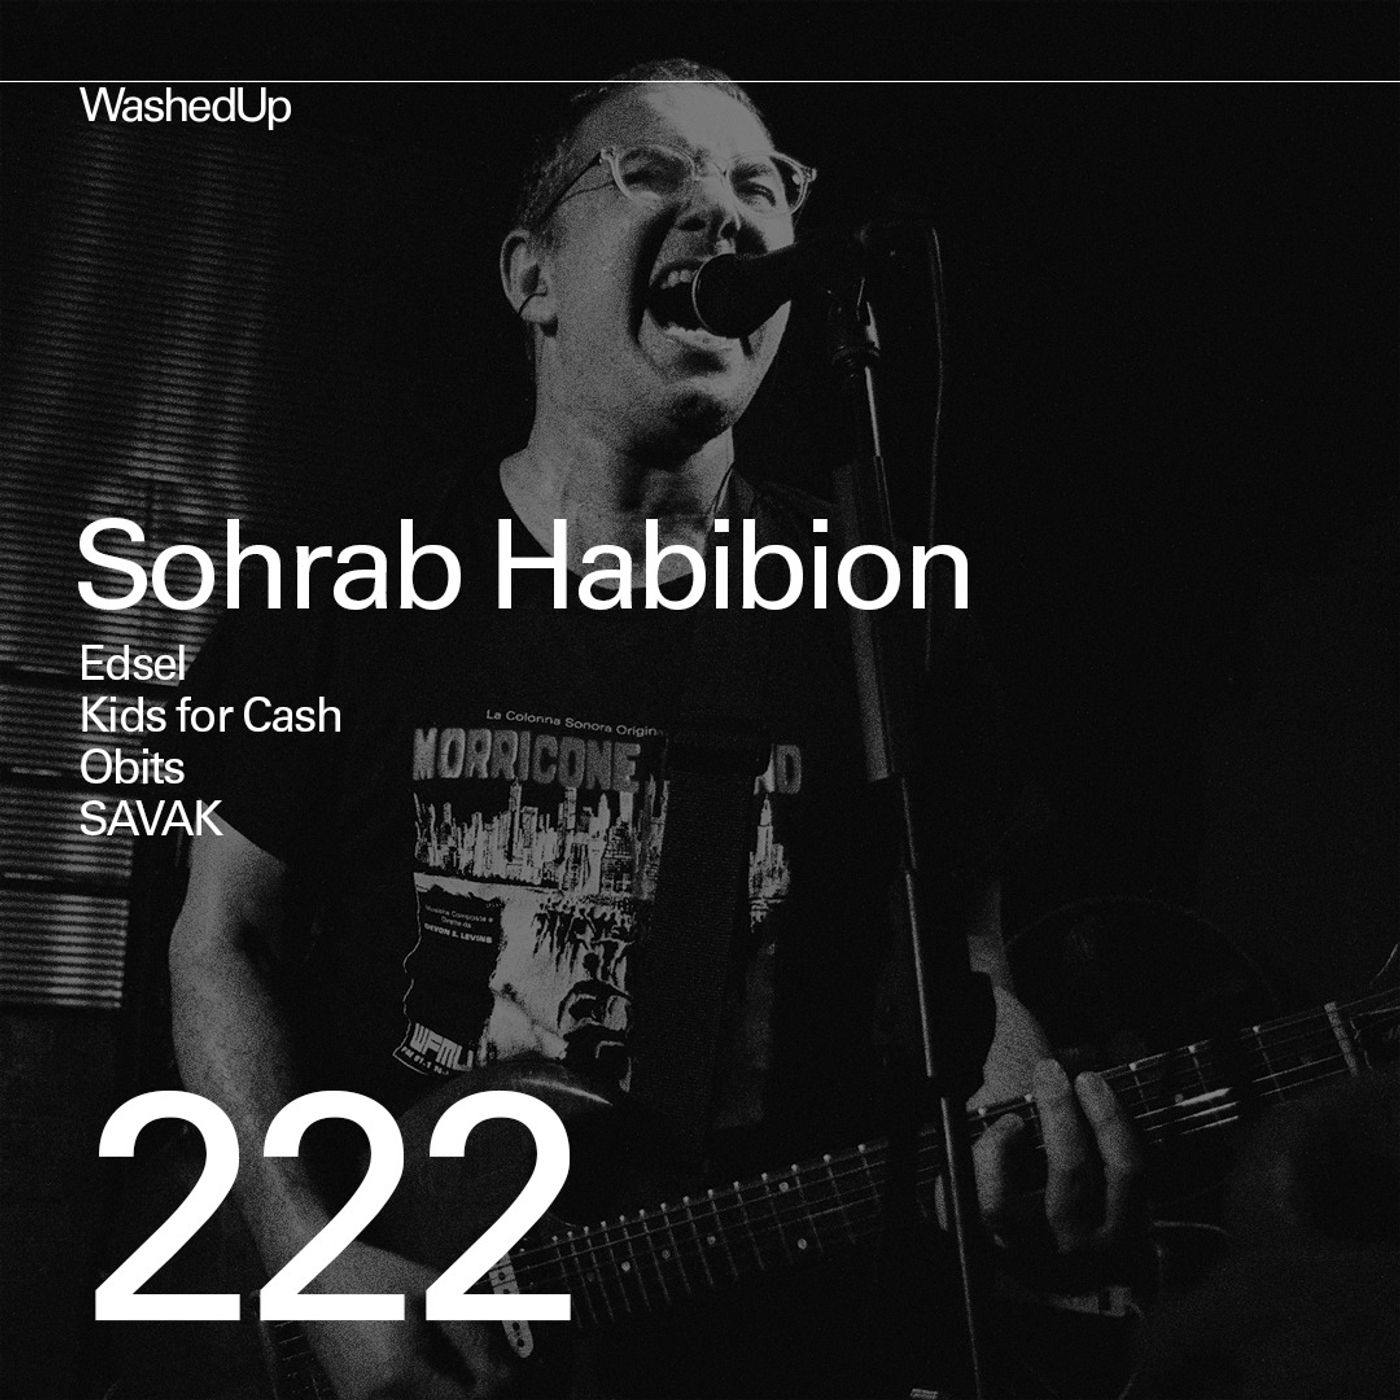 #222 - Sohrab Habibion (Edsel, Kids for Cash, Obits, SAVAK)